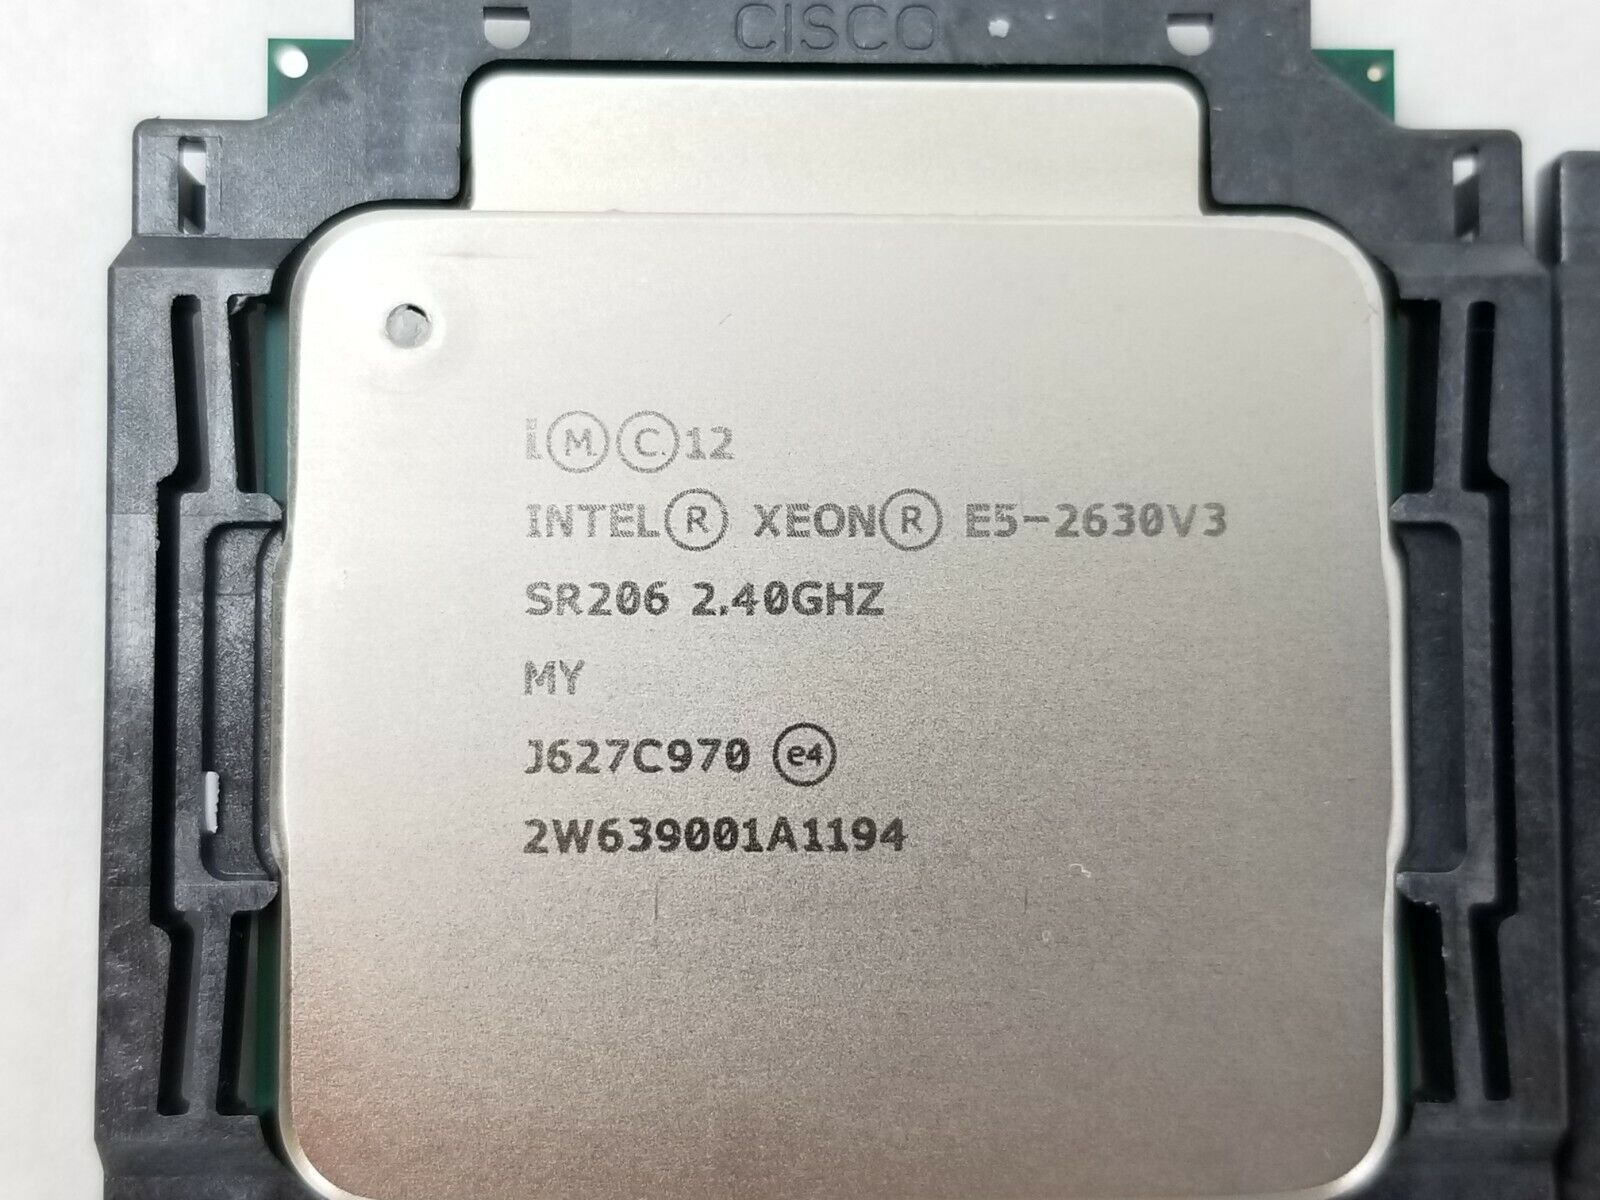 Matching Pair Intel Xeon E5-2630 V3 8-Core 2.4GHz SR206 LGA2011-3 Processor CPU